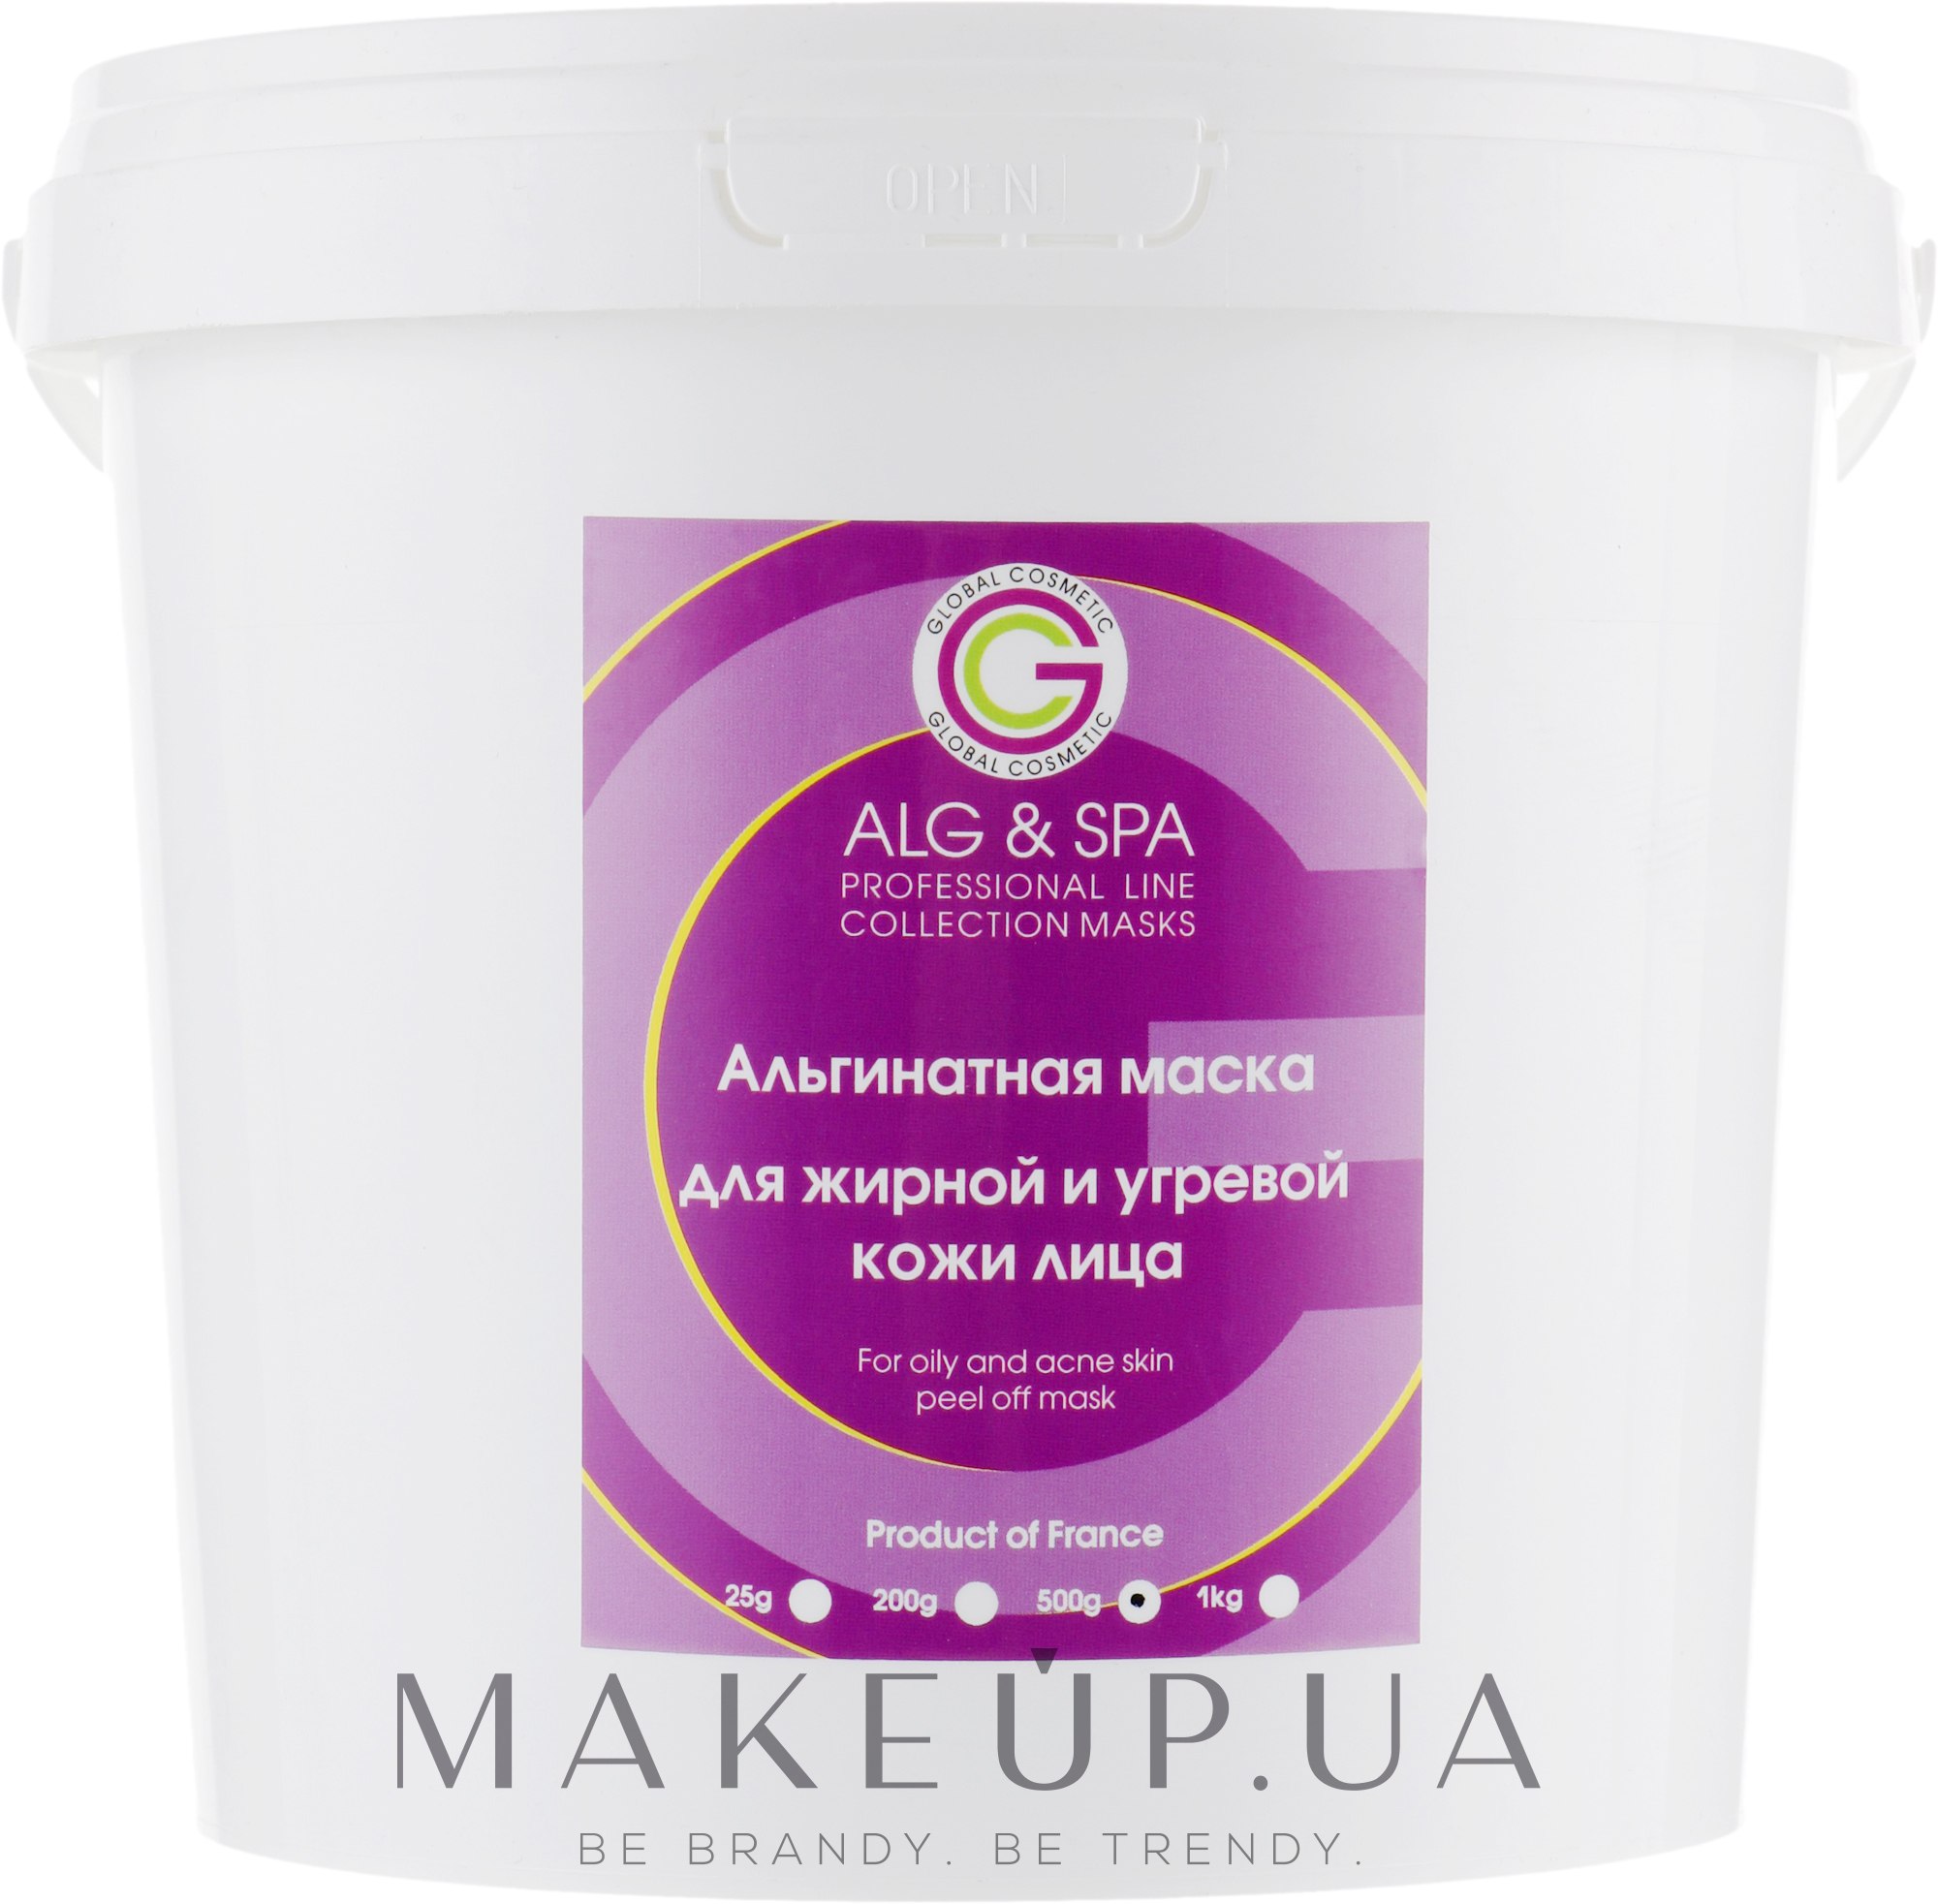 Альгінатна маска для жирної і вугревої шкіри - ALG & SPA Professional Line Collection Masks For Oily And Acne Skin Peel Off Mask — фото 500g